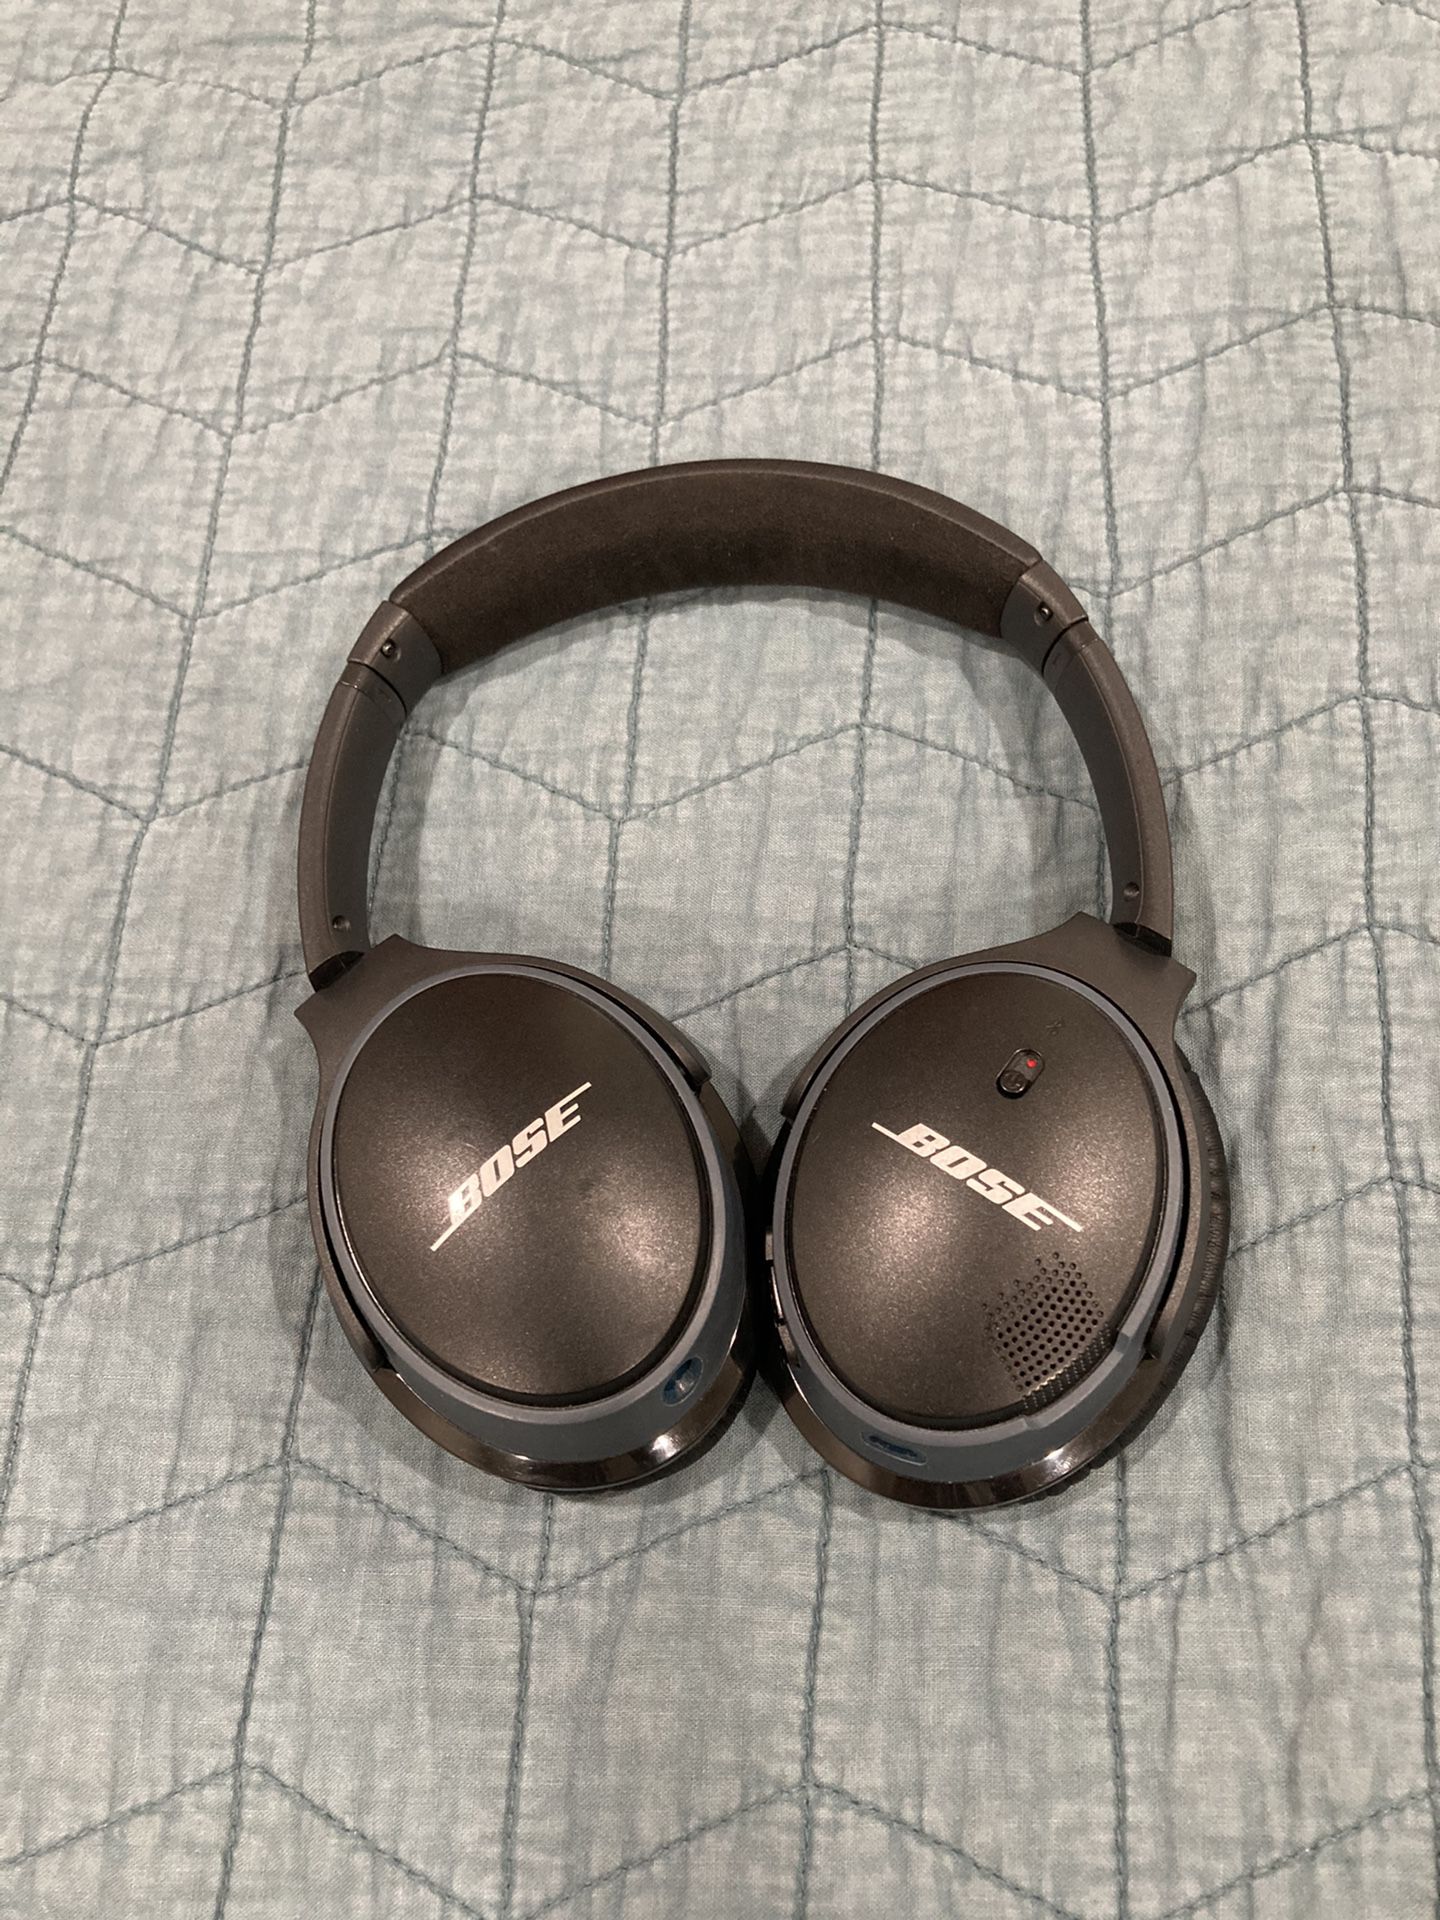 Bose Sound link ll Around Ear Wireless Headphones